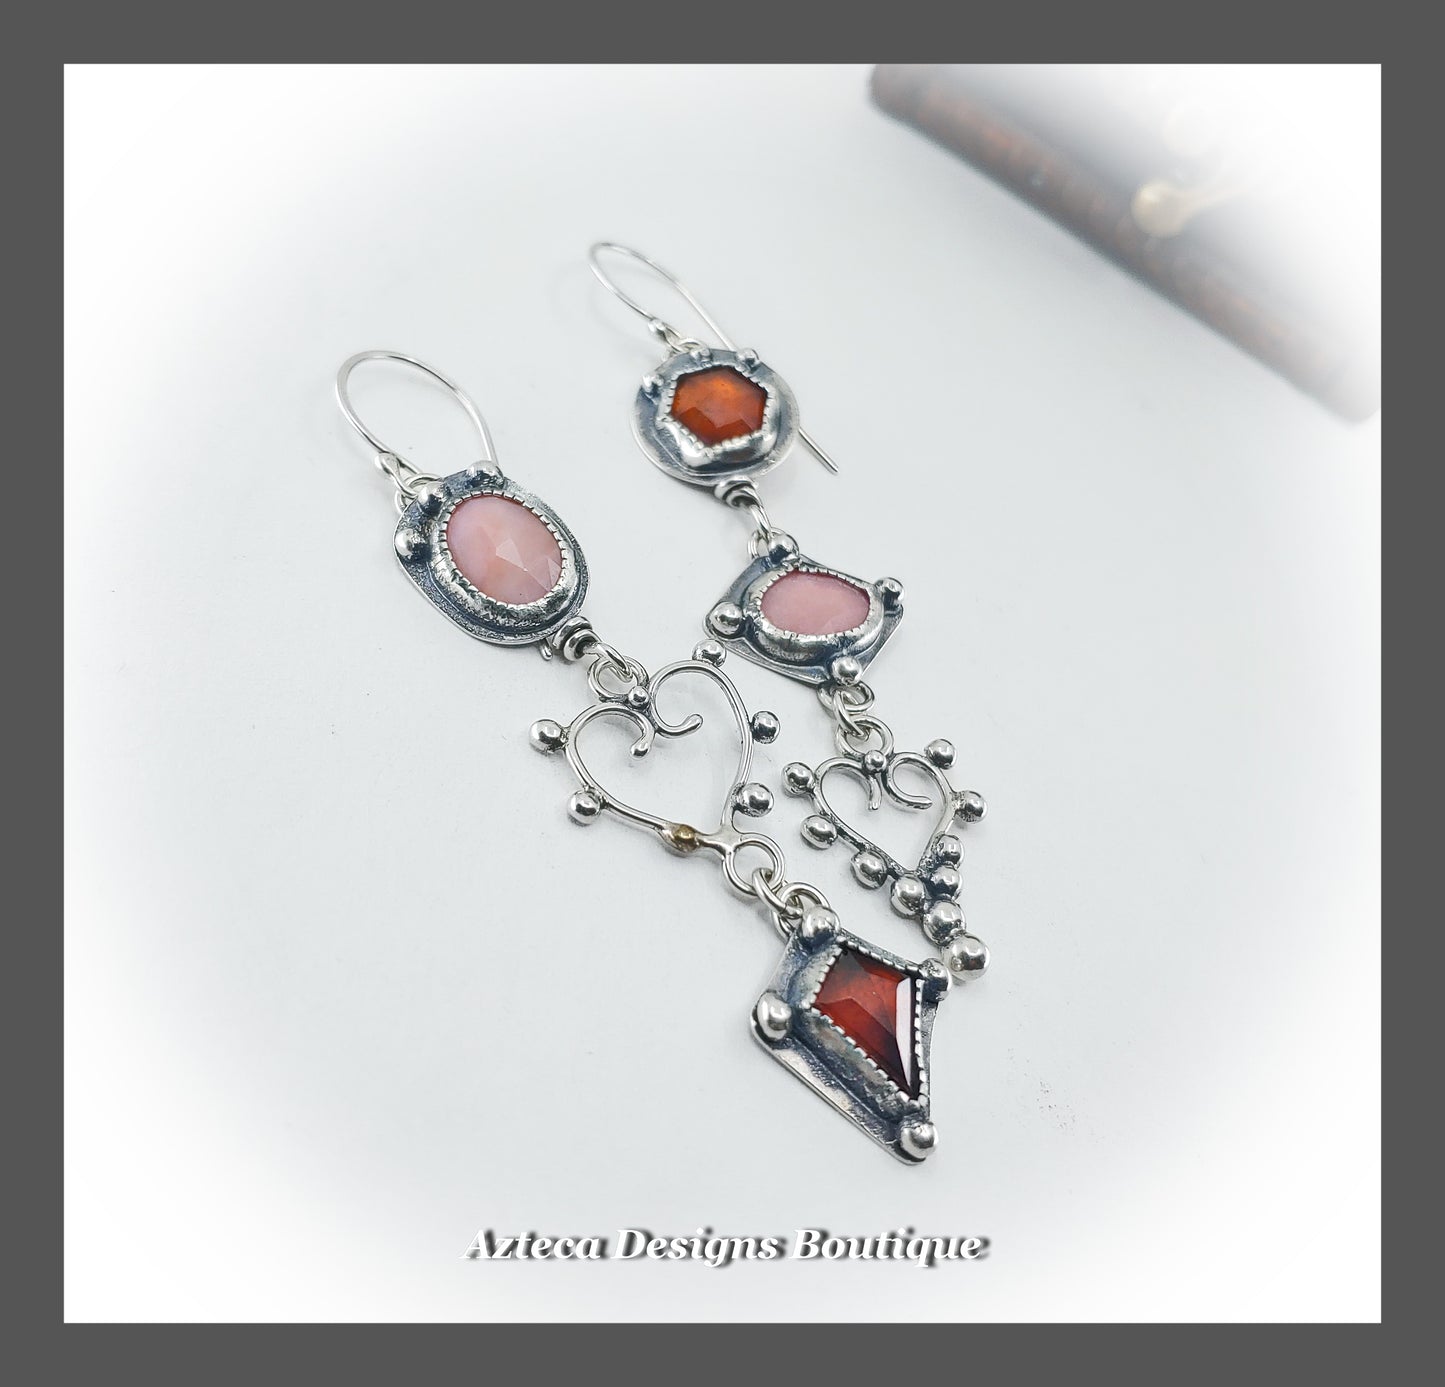 Argentium Silver Hearts + Hessonite Garnet + Pink Opal + Asymmetrical Earrings